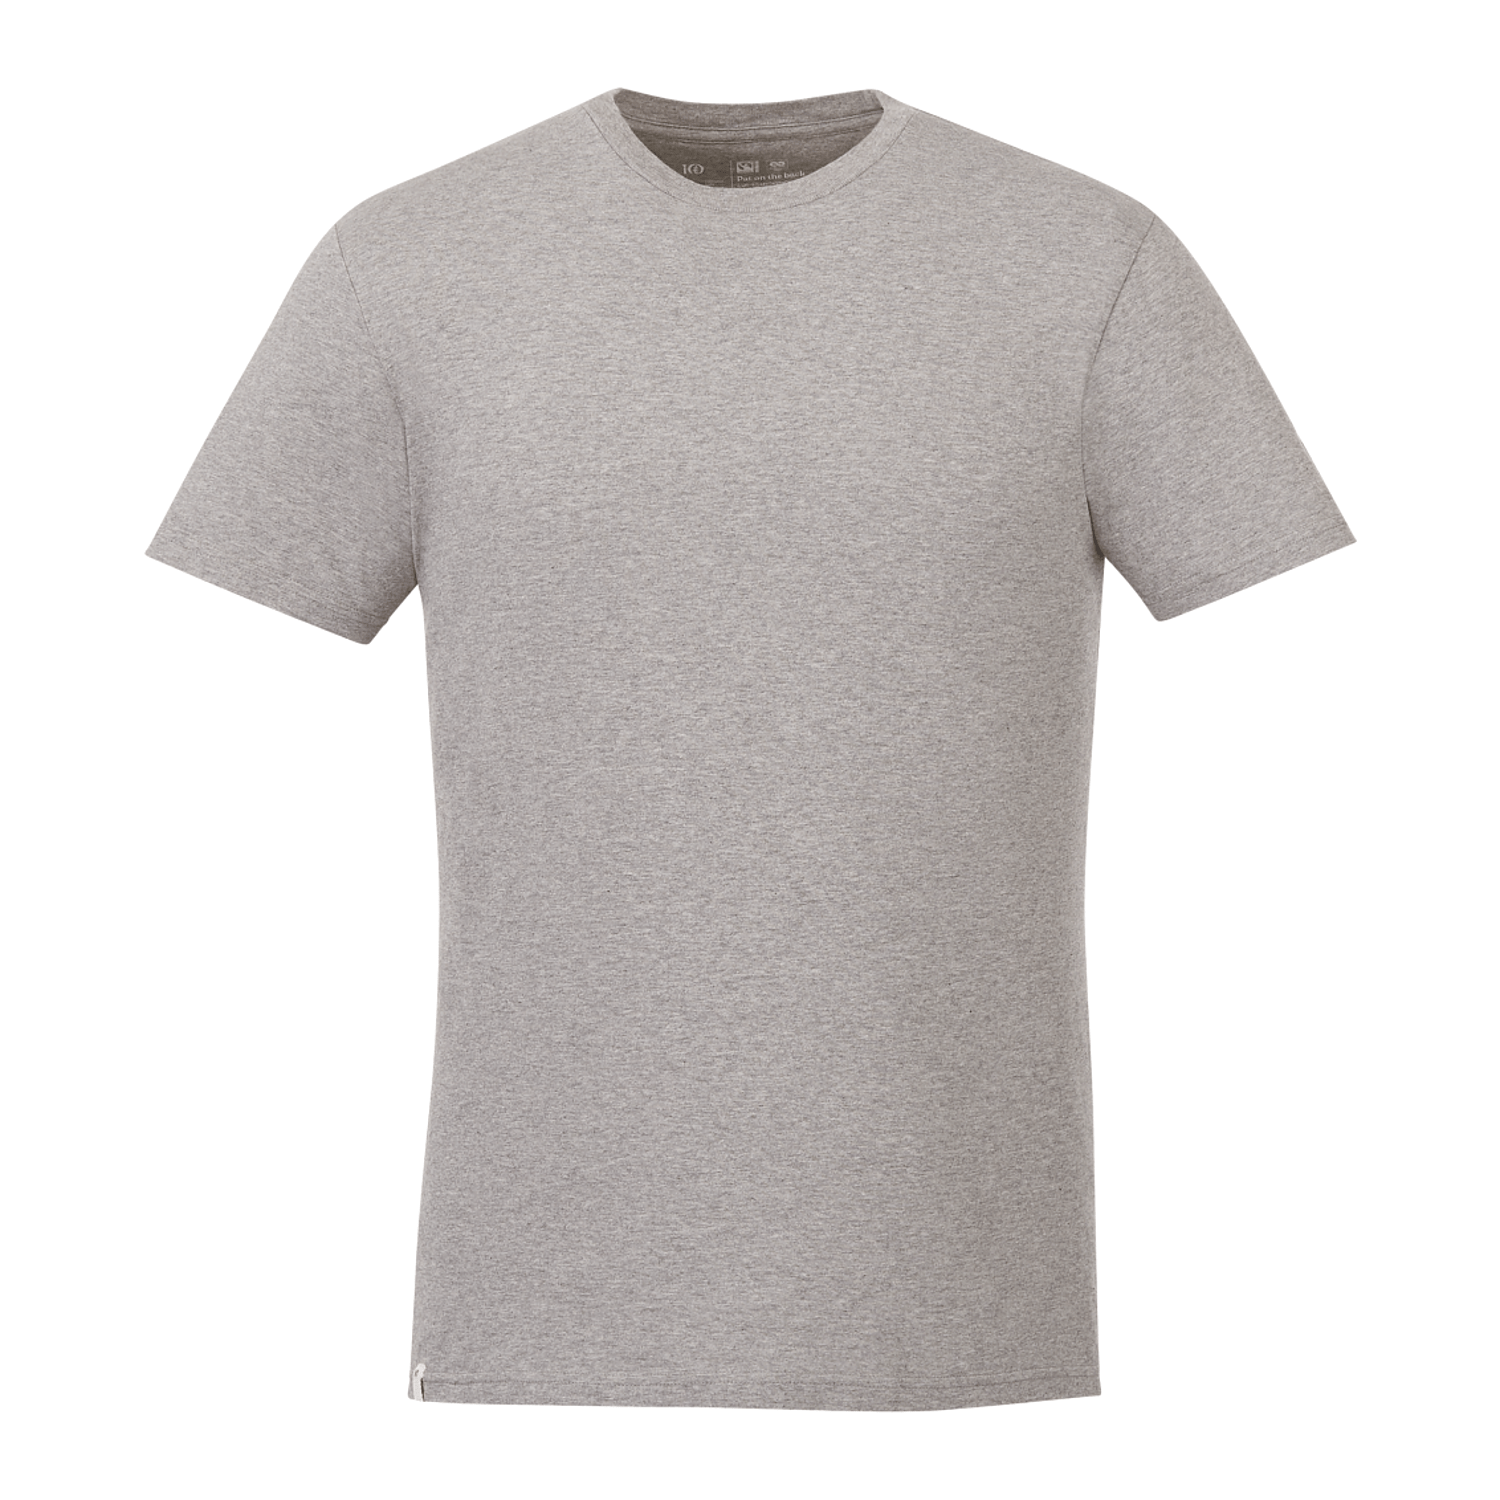 tentree T-shirts S / Heather Grey tentree - Men's Organic Cotton Short Sleeve Tee